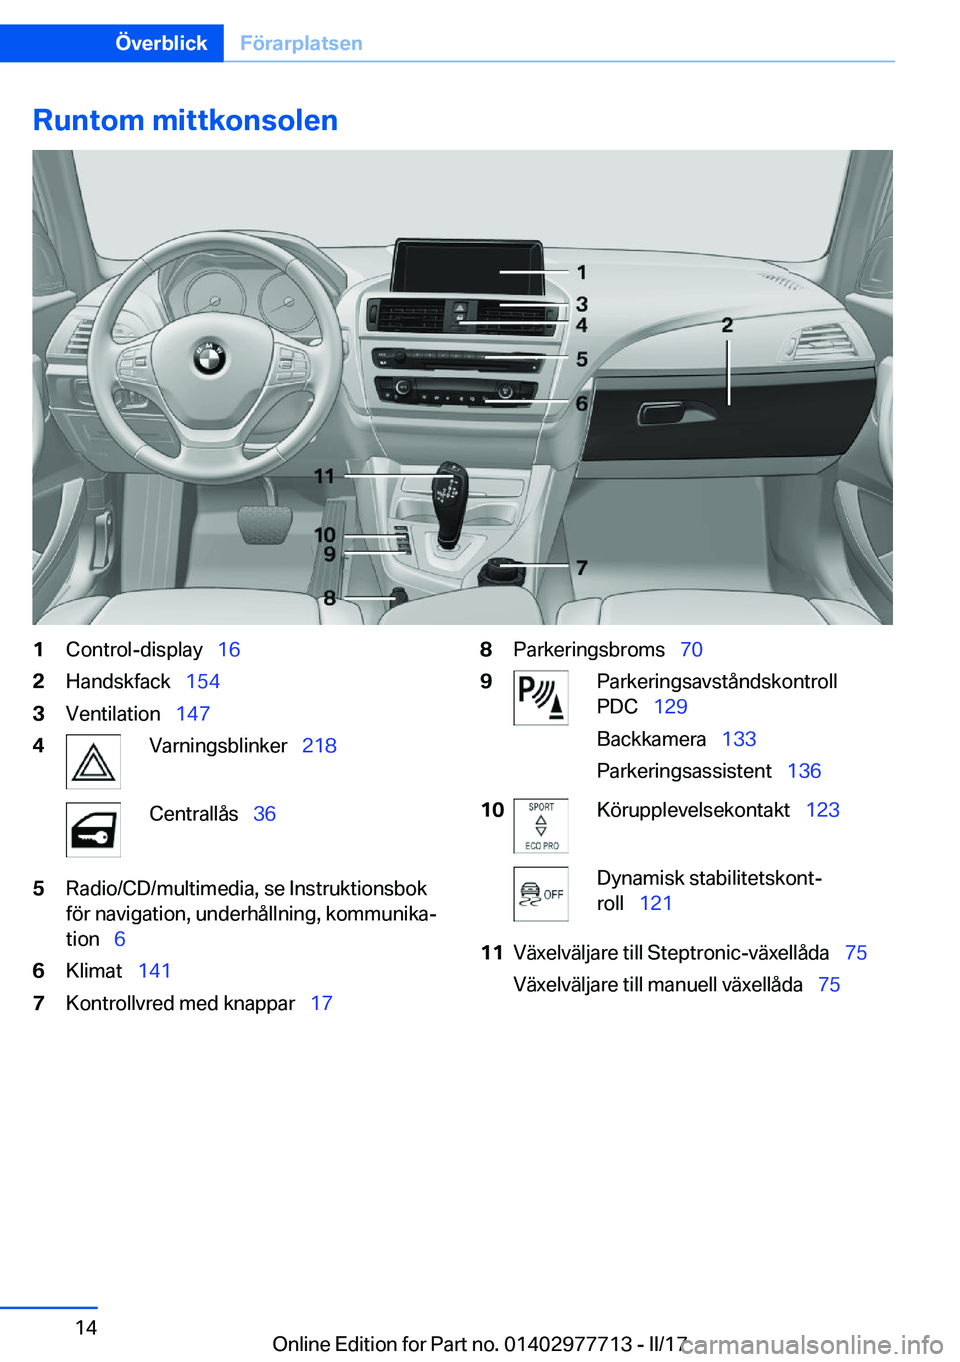 BMW 2 SERIES COUPE 2017  InstruktionsbÖcker (in Swedish) �R�u�n�t�o�m��m�i�t�t�k�o�n�s�o�l�e�n�1�C�o�n�t�r�o�l�-�d�i�s�p�l�a�y\_�1�6�2�H�a�n�d�s�k�f�a�c�k\_�1�5�4�3�V�e�n�t�i�l�a�t�i�o�n\_�1�4�7�4�V�a�r�n�i�n�g�s�b�l�i�n�k�e�r\_ �2�1�8�C�e�n�t�r�a�